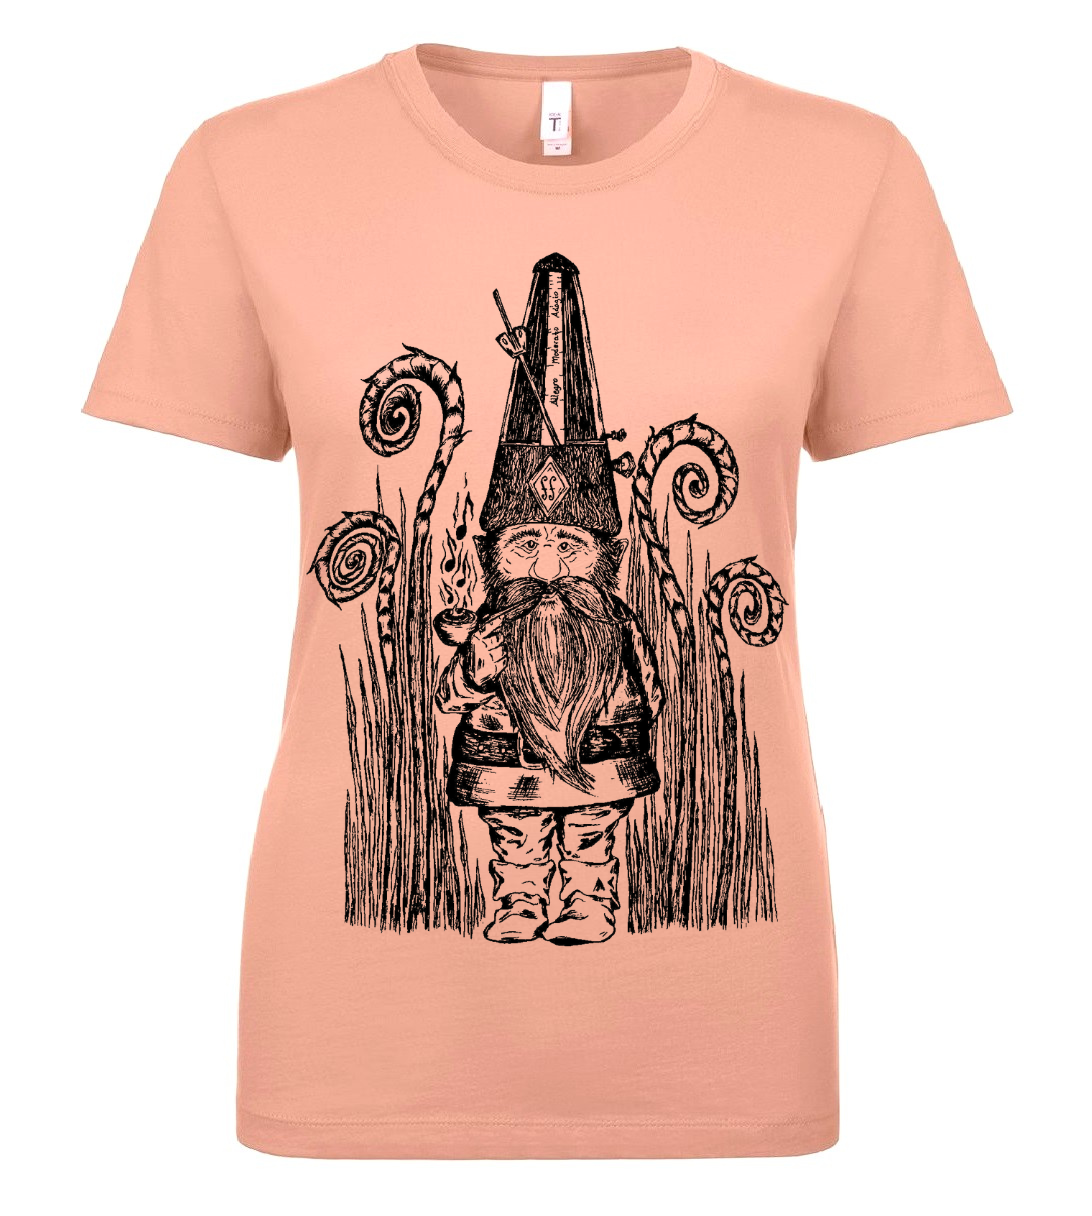 A Metro Gnome Ladies T Shirt